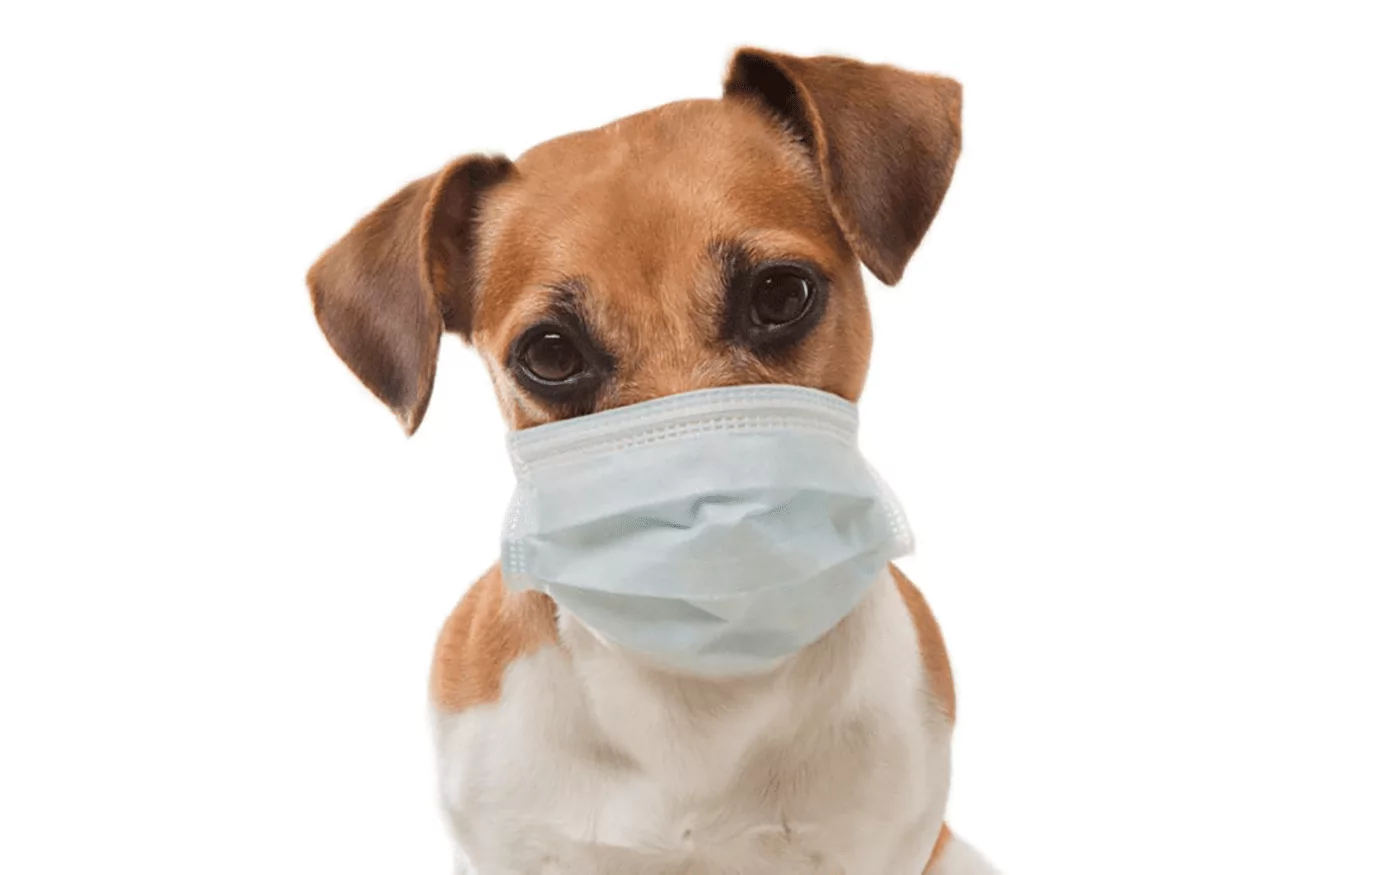 Coronavirus Puppy scams increase during Lockdown - Petscams.com